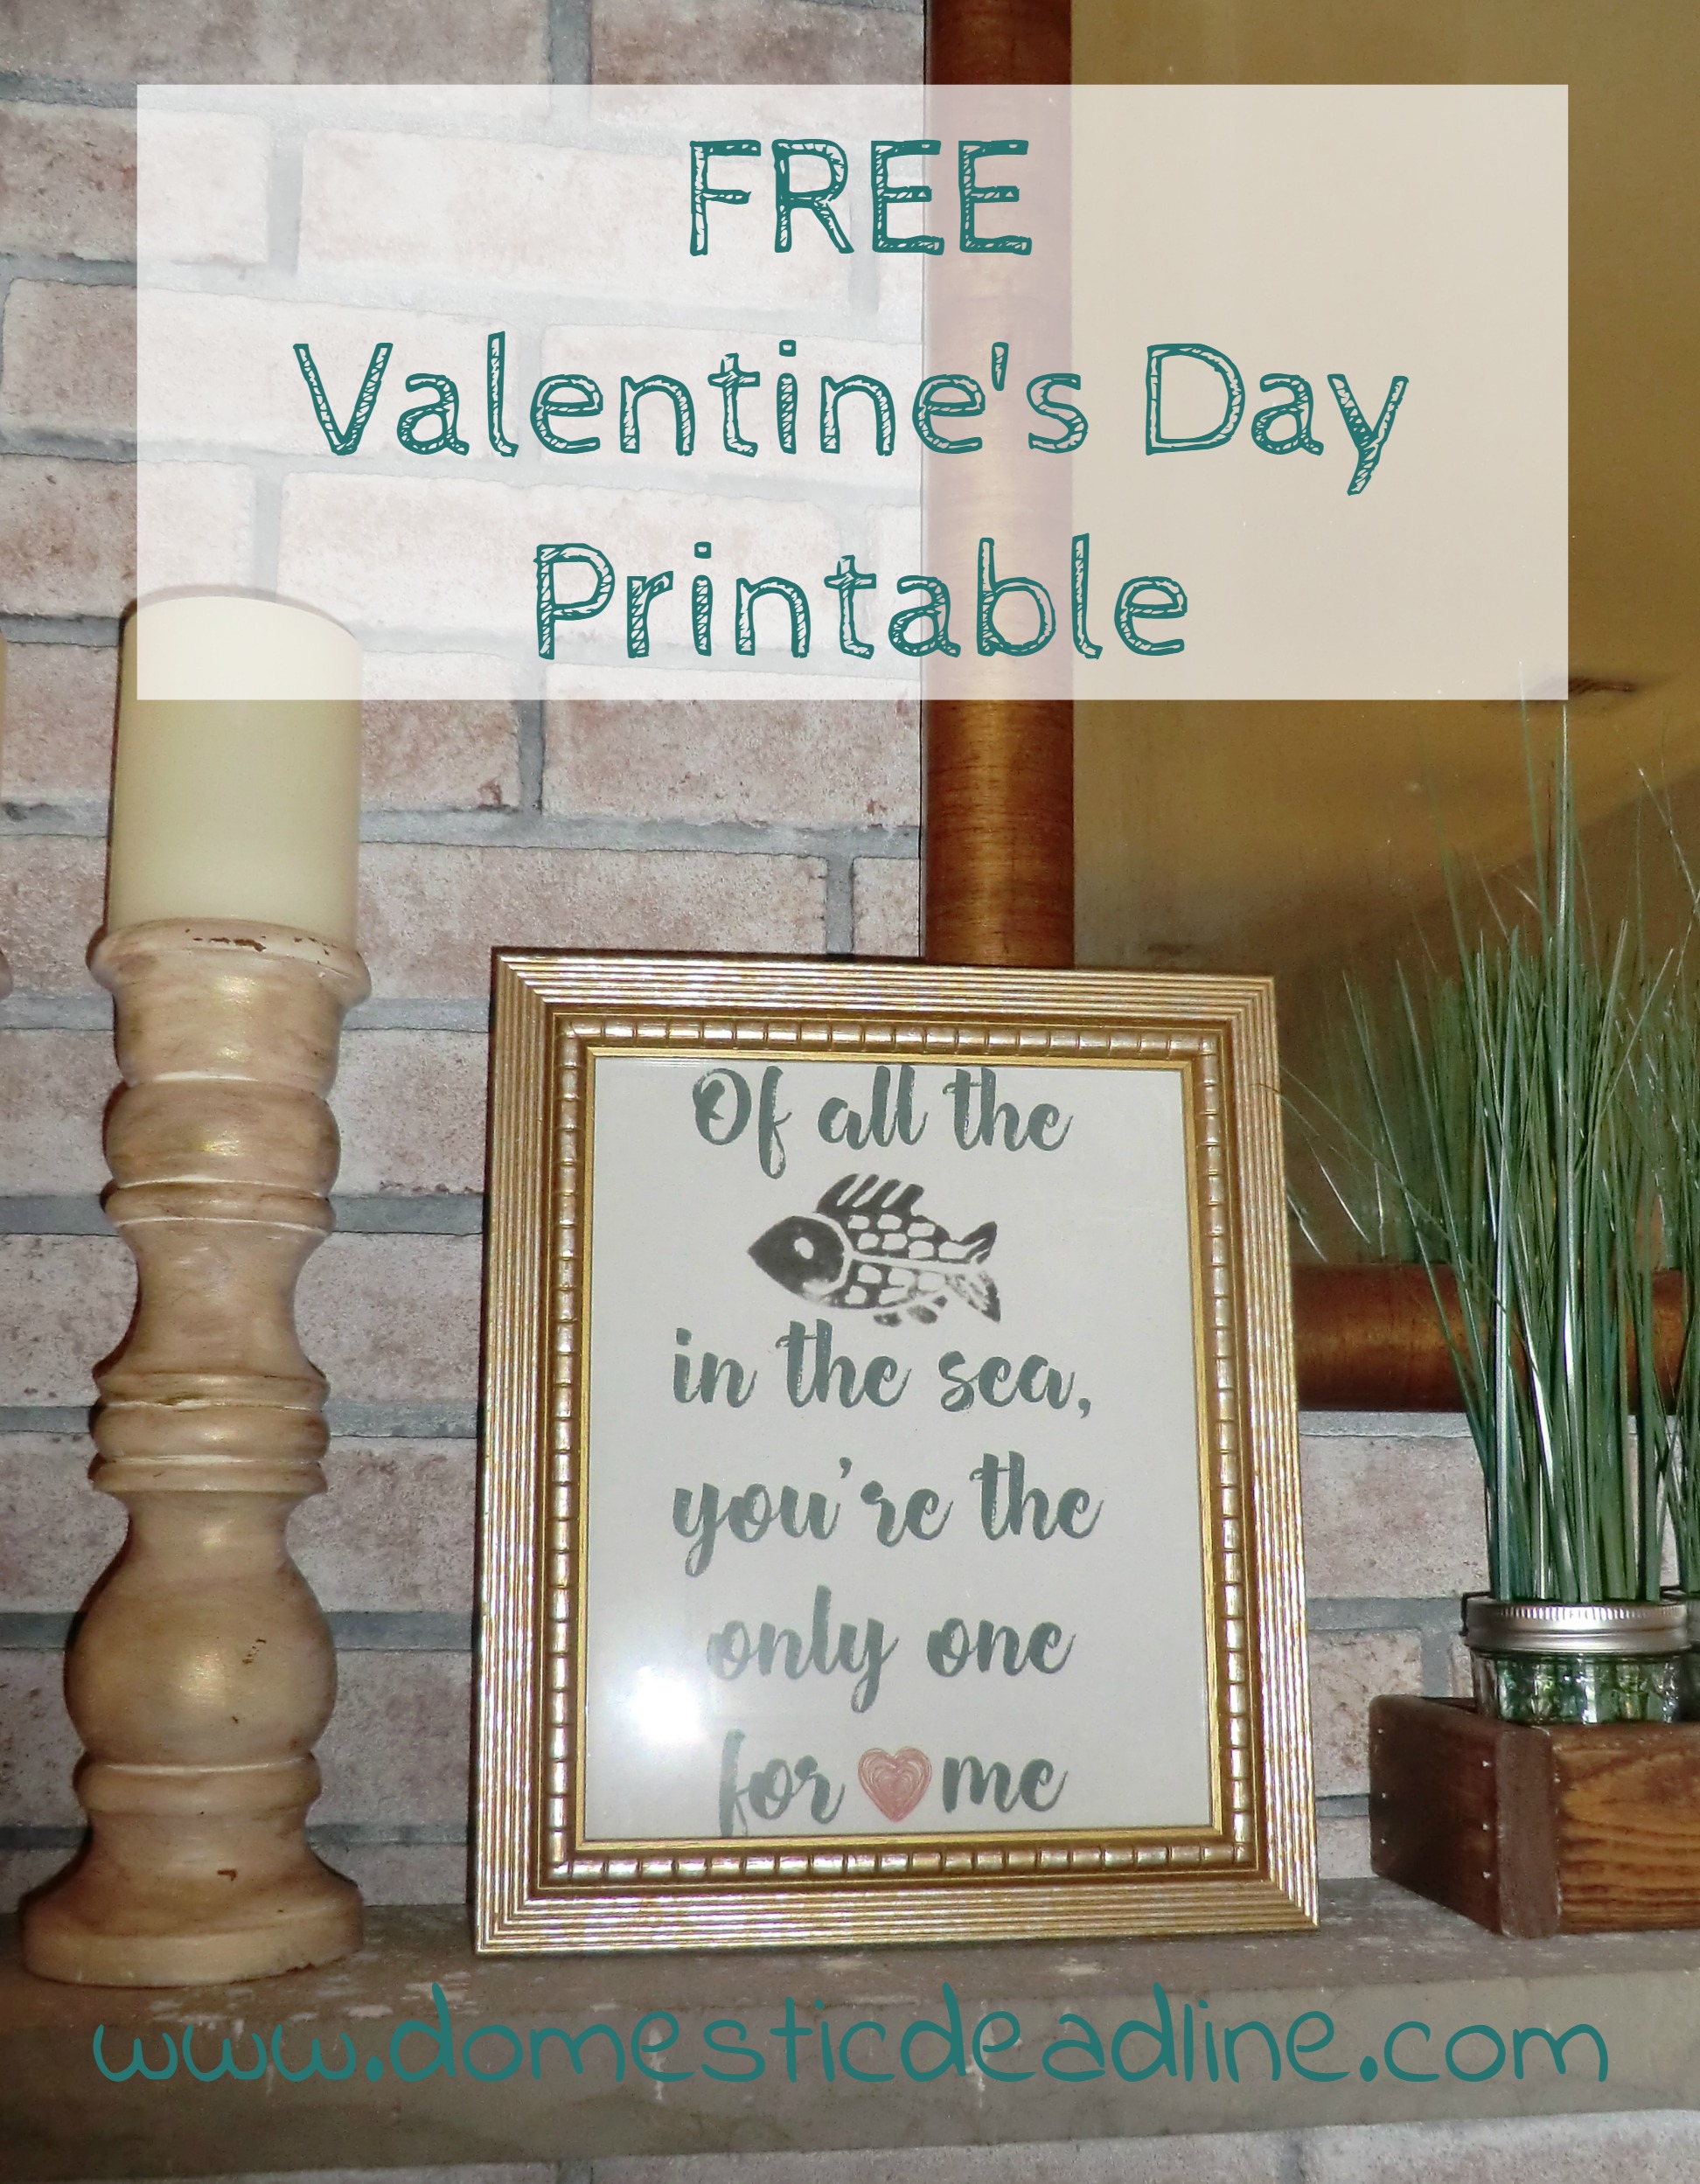 FREE Valentine's Day Printable